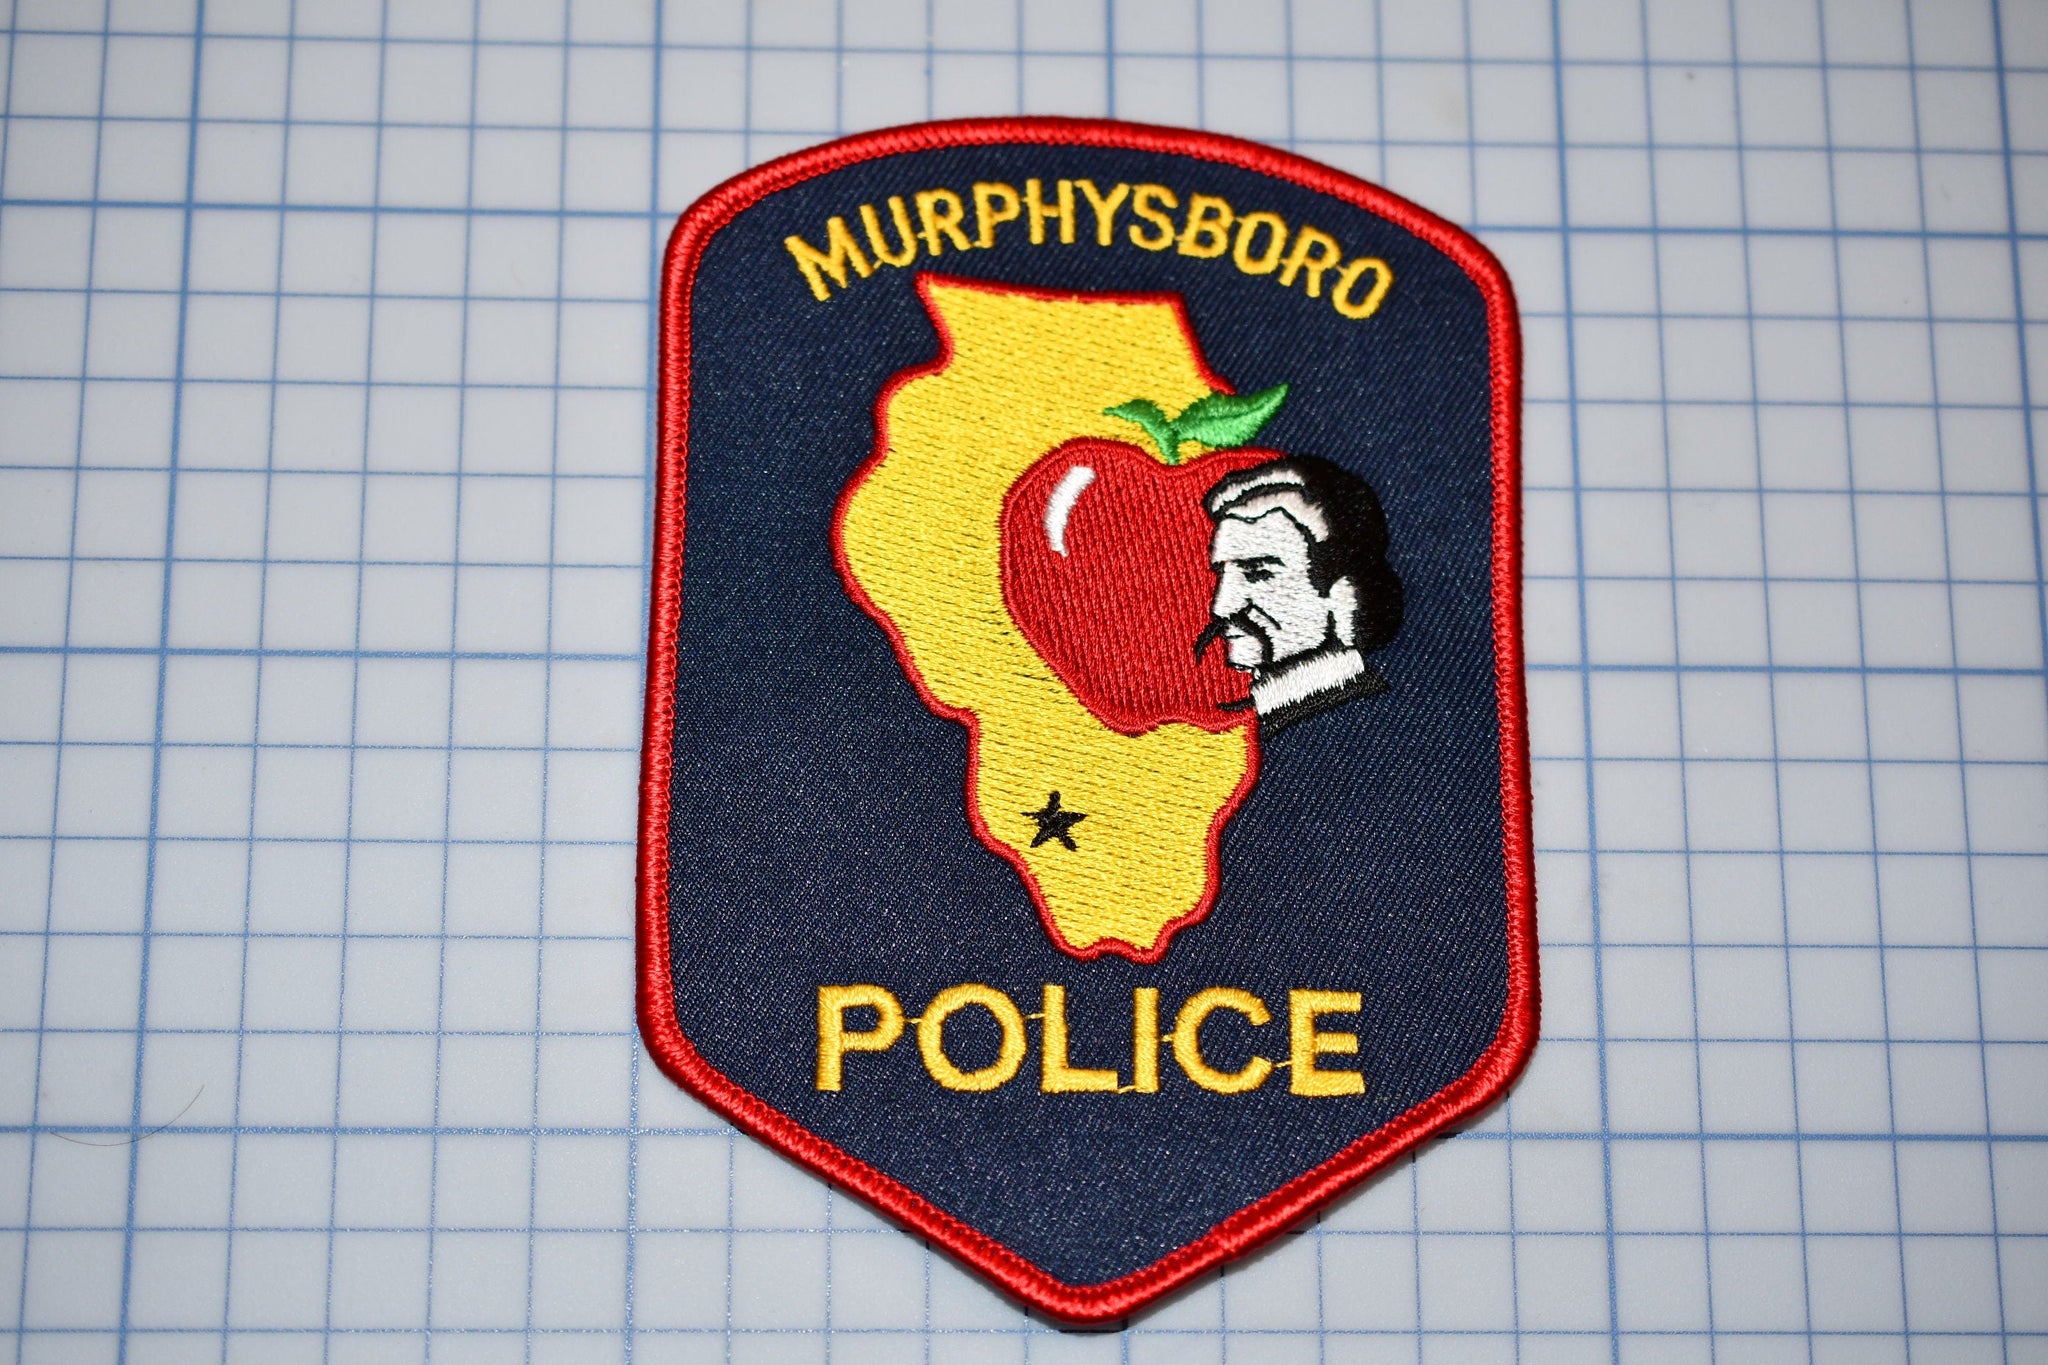 Murphysboro Illinois Police Patch (B23-322)